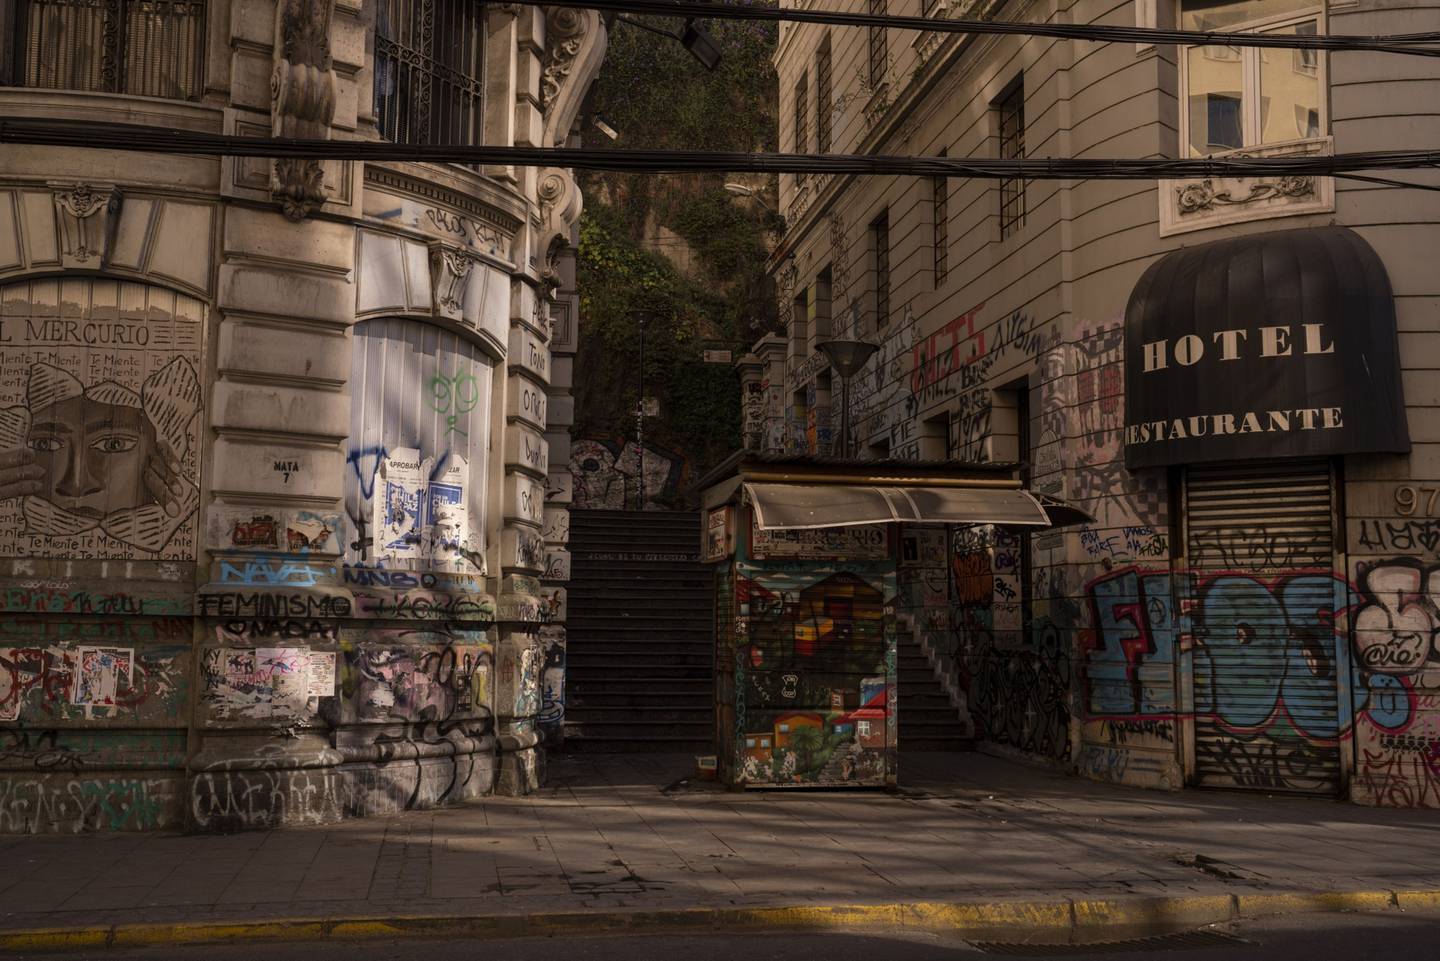 Un hotel cerrado en Valparaíso, en Chile. Fotógrafa: Tamara Merino/Bloomberg